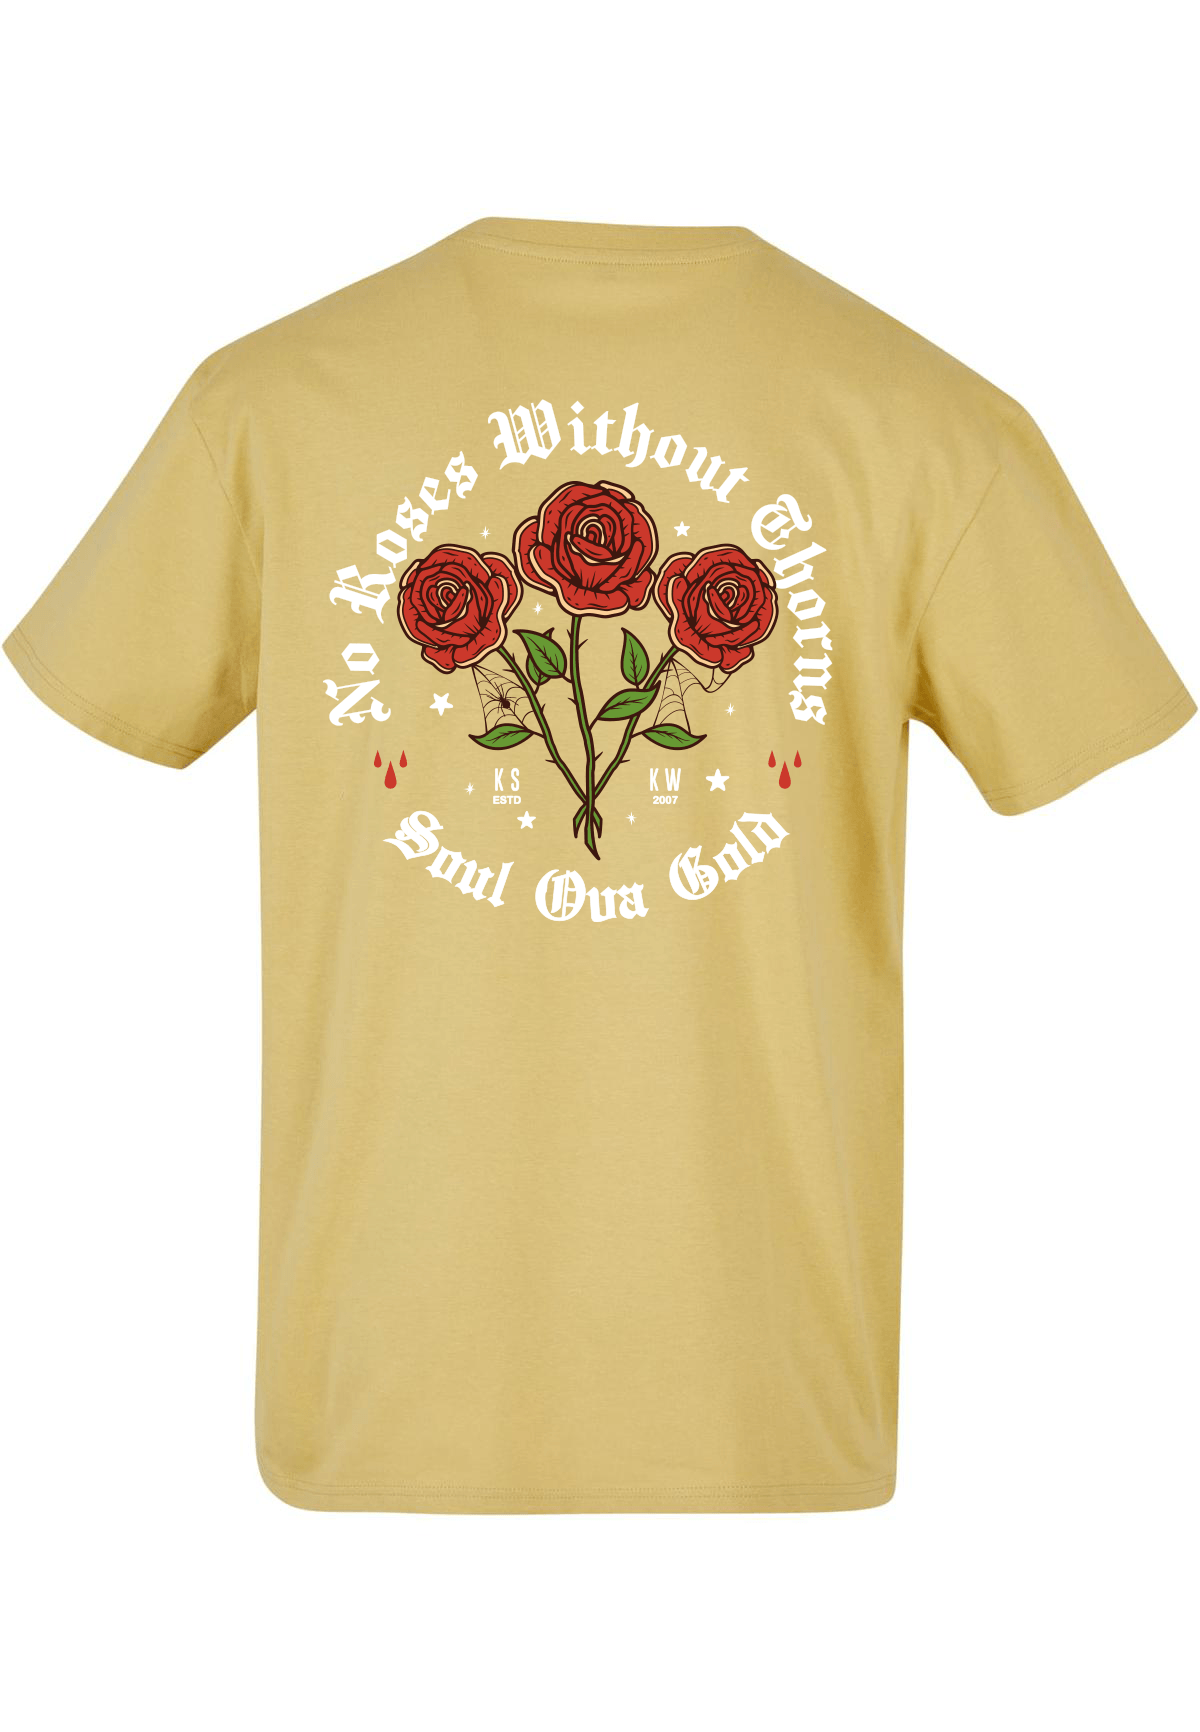 Soul Ova Gold Men's Tees No Roses Heavyweight T-Shirt (Pale Moss) No Roses Heavyweight T-Shirt (Pale Moss)  | Soul Ova Gold